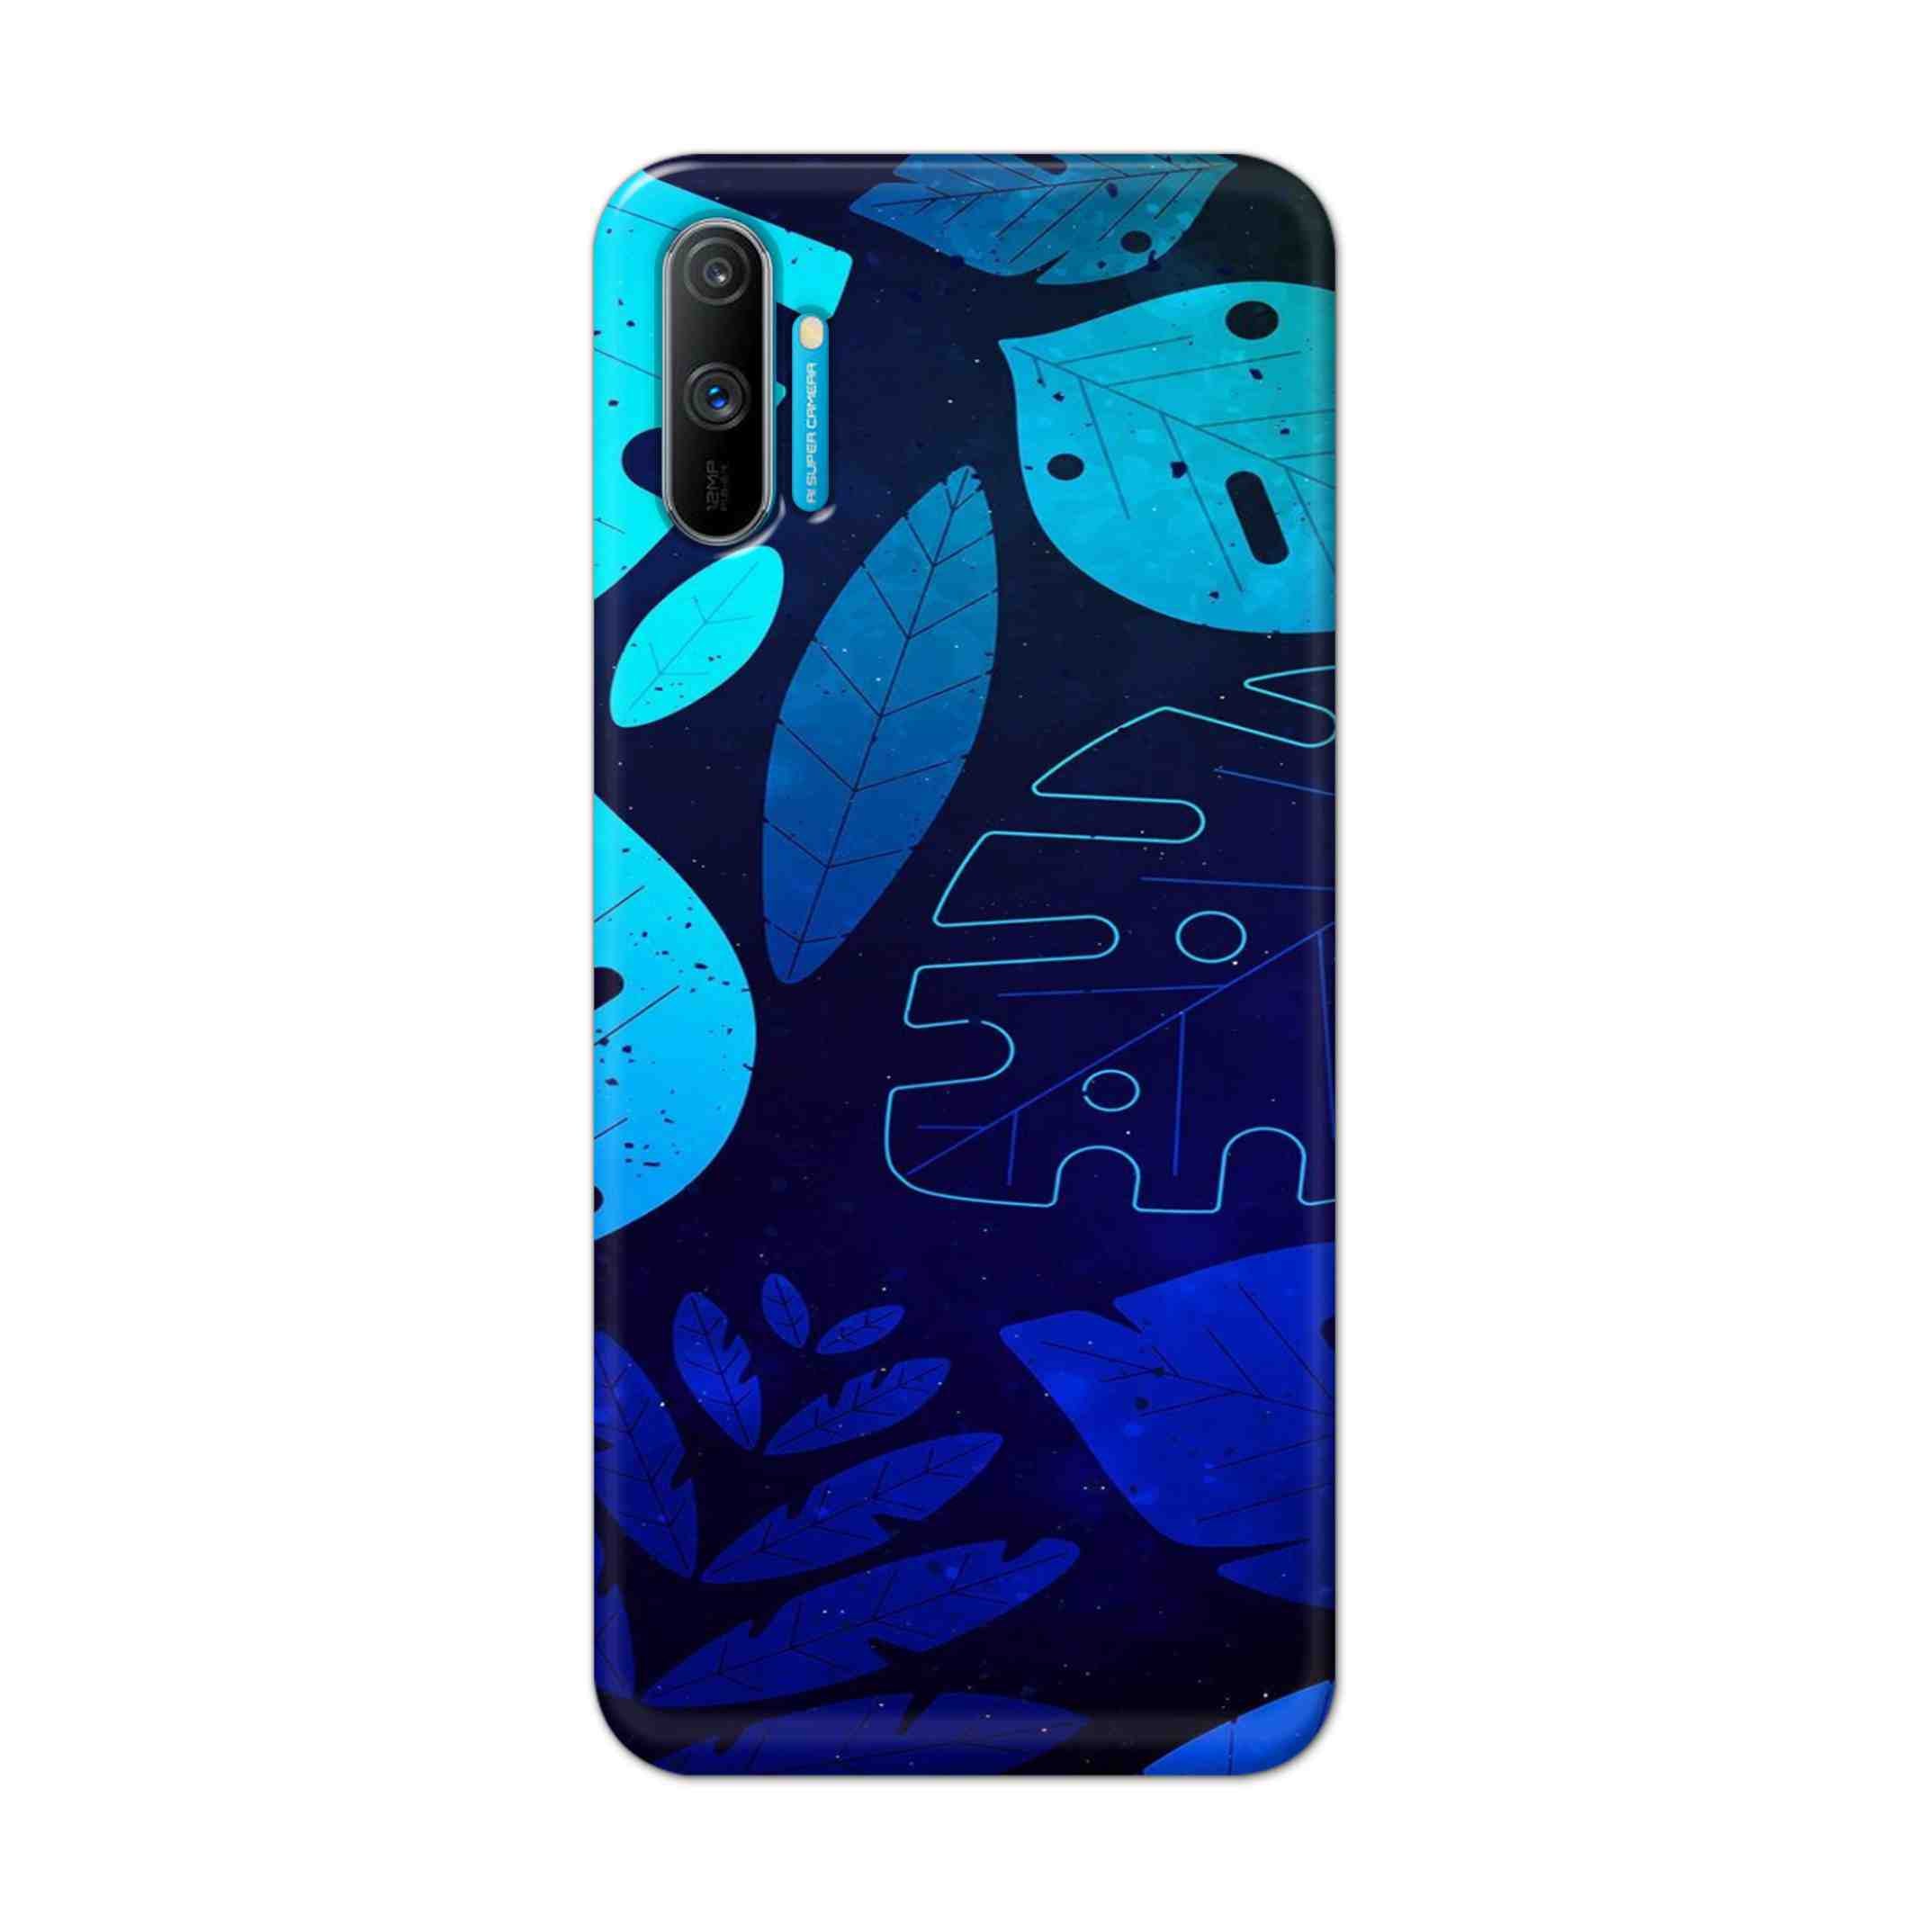 Buy Neon Leaf Hard Back Mobile Phone Case Cover For Realme C3 Online